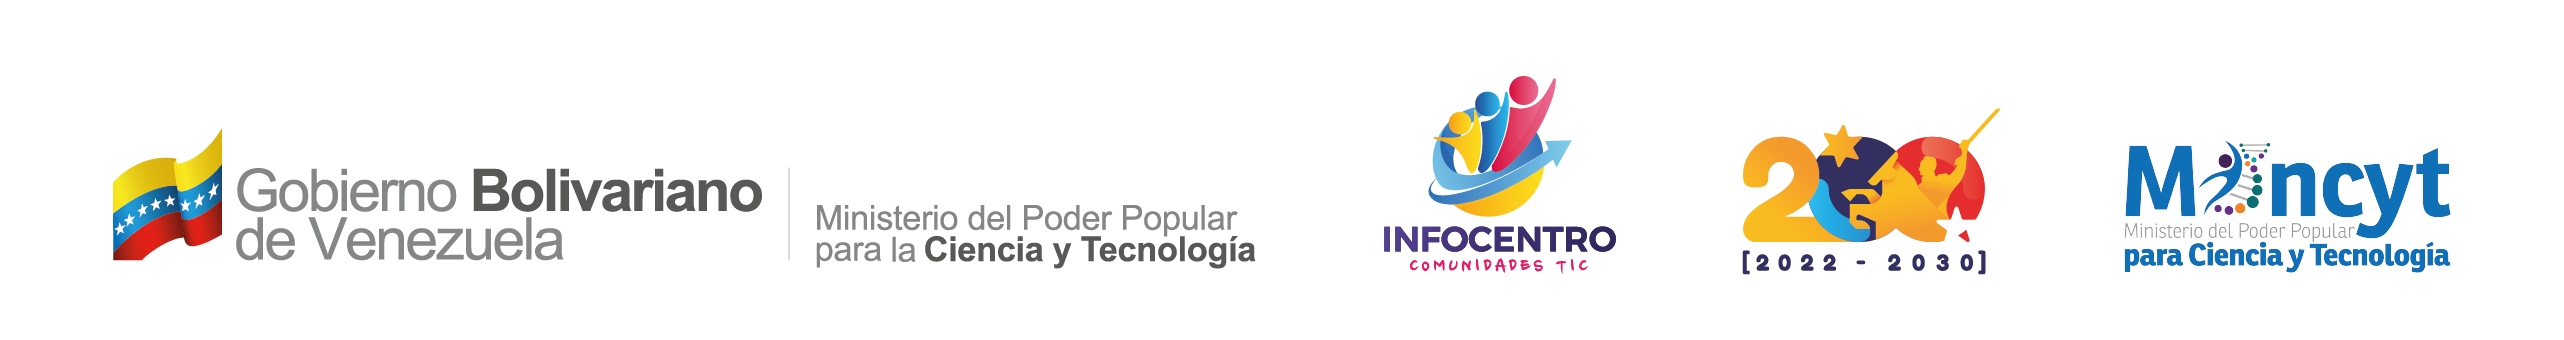 Infocentro logo